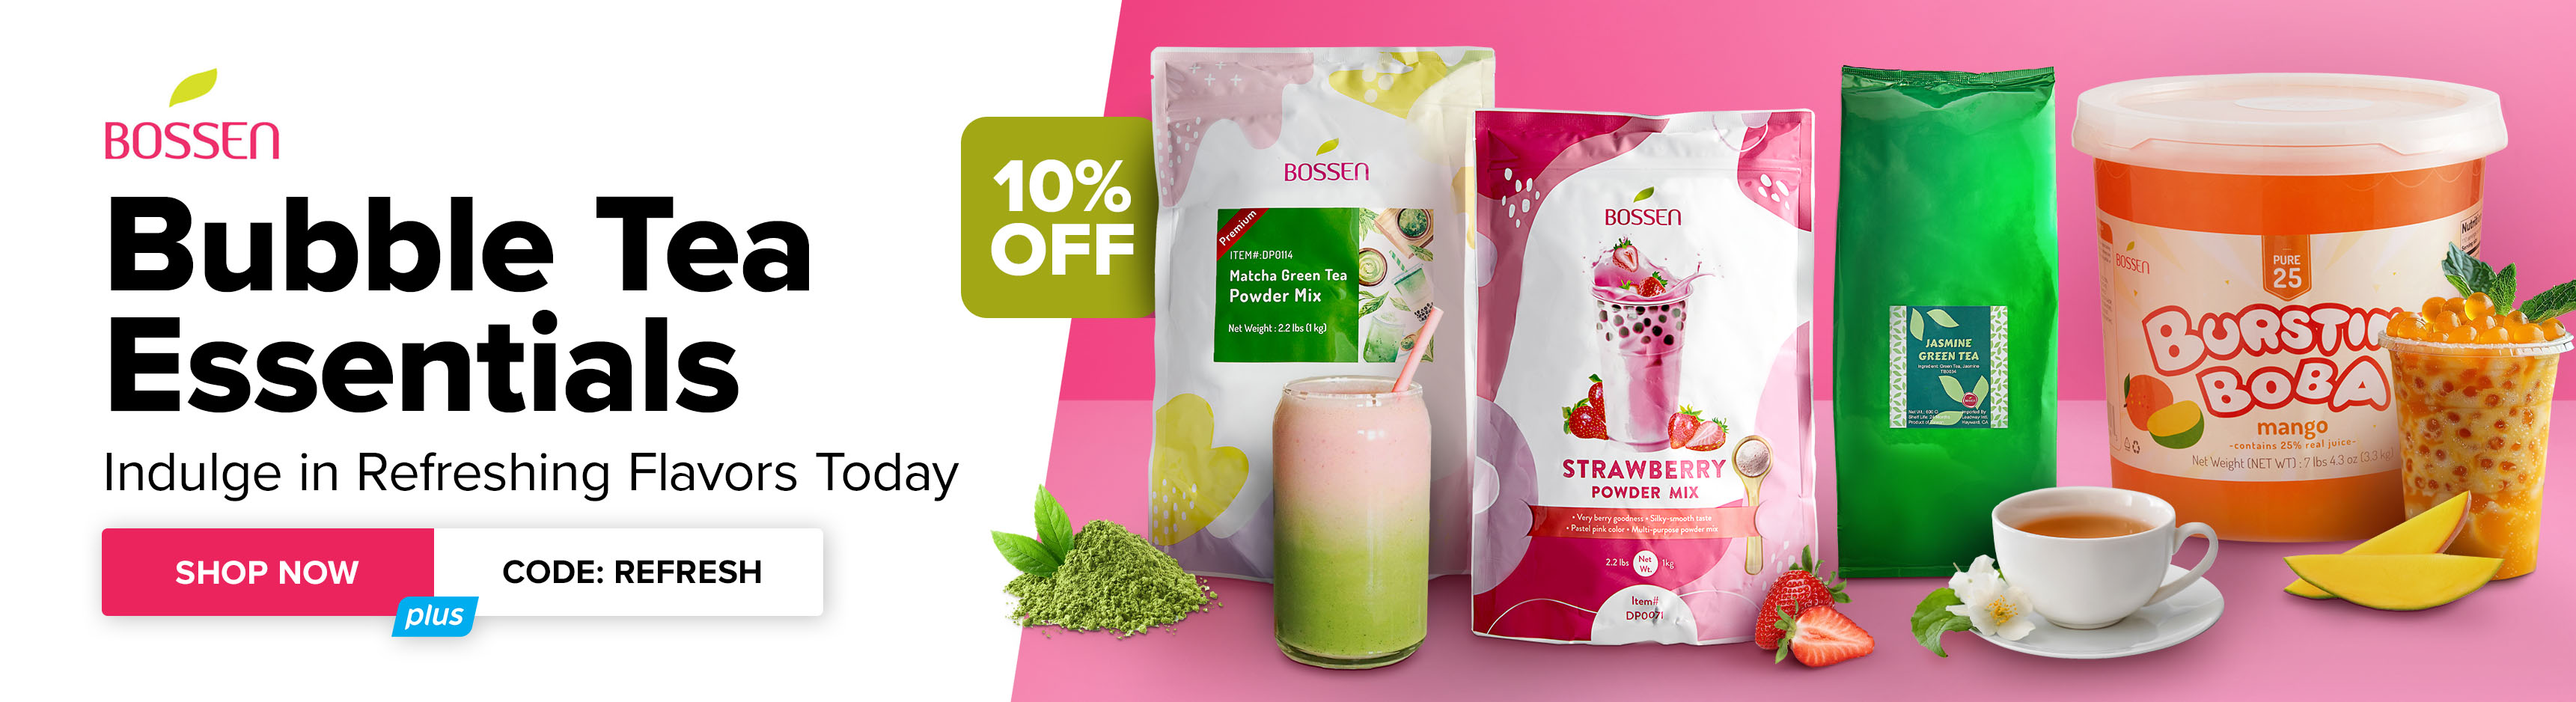 Save 10% on Bossen bubble tea essentials